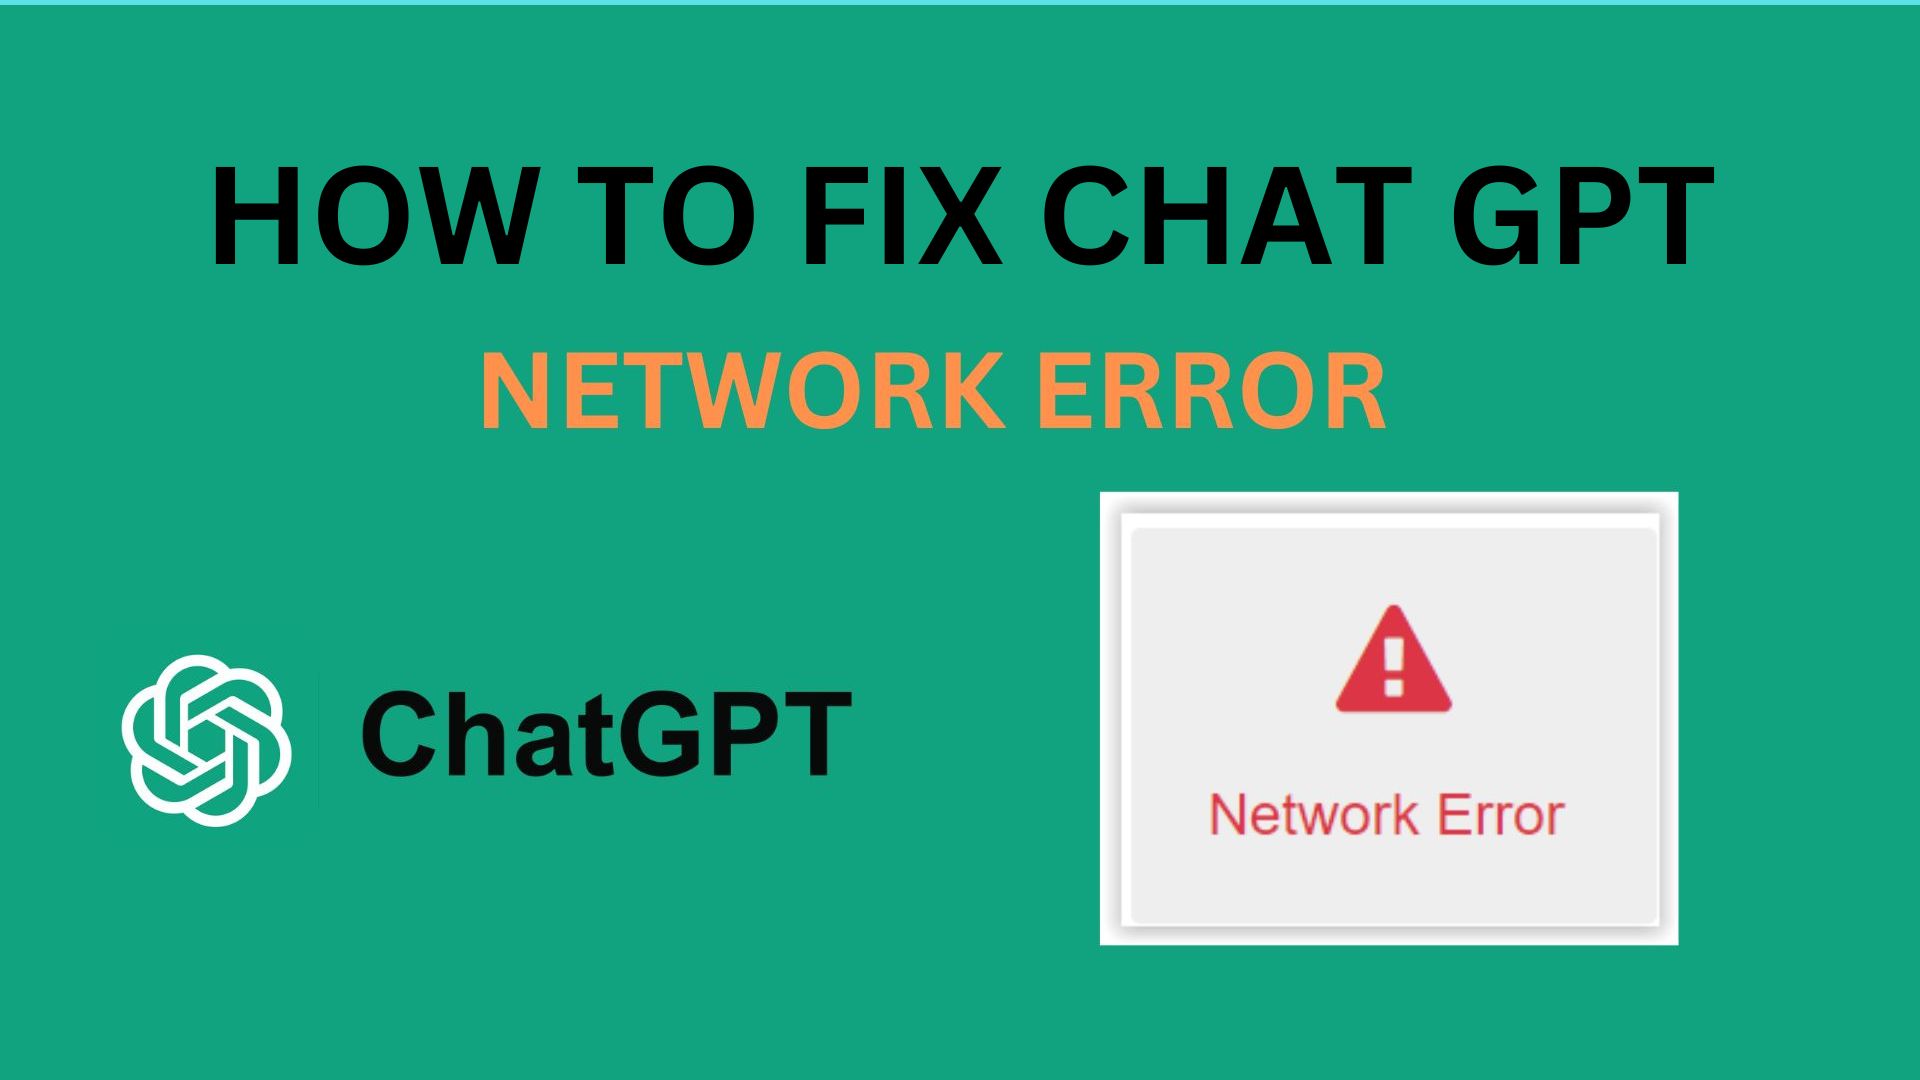 Chat Gpt network error